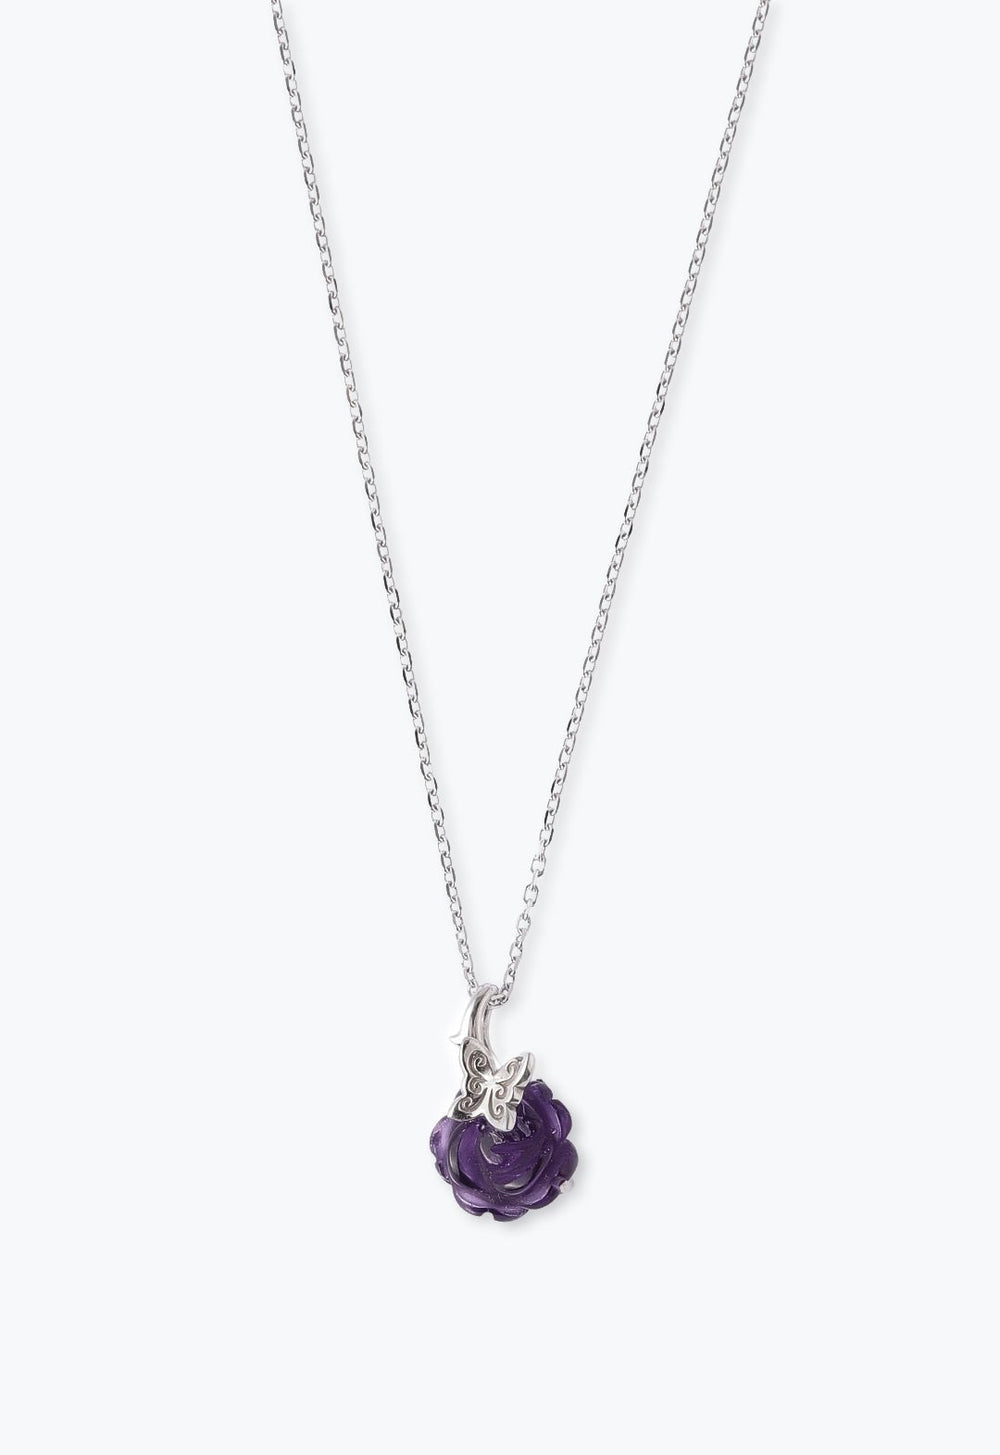 Purple Rose Pendant On Silver Chain Stock Photo 1473714455 | Shutterstock